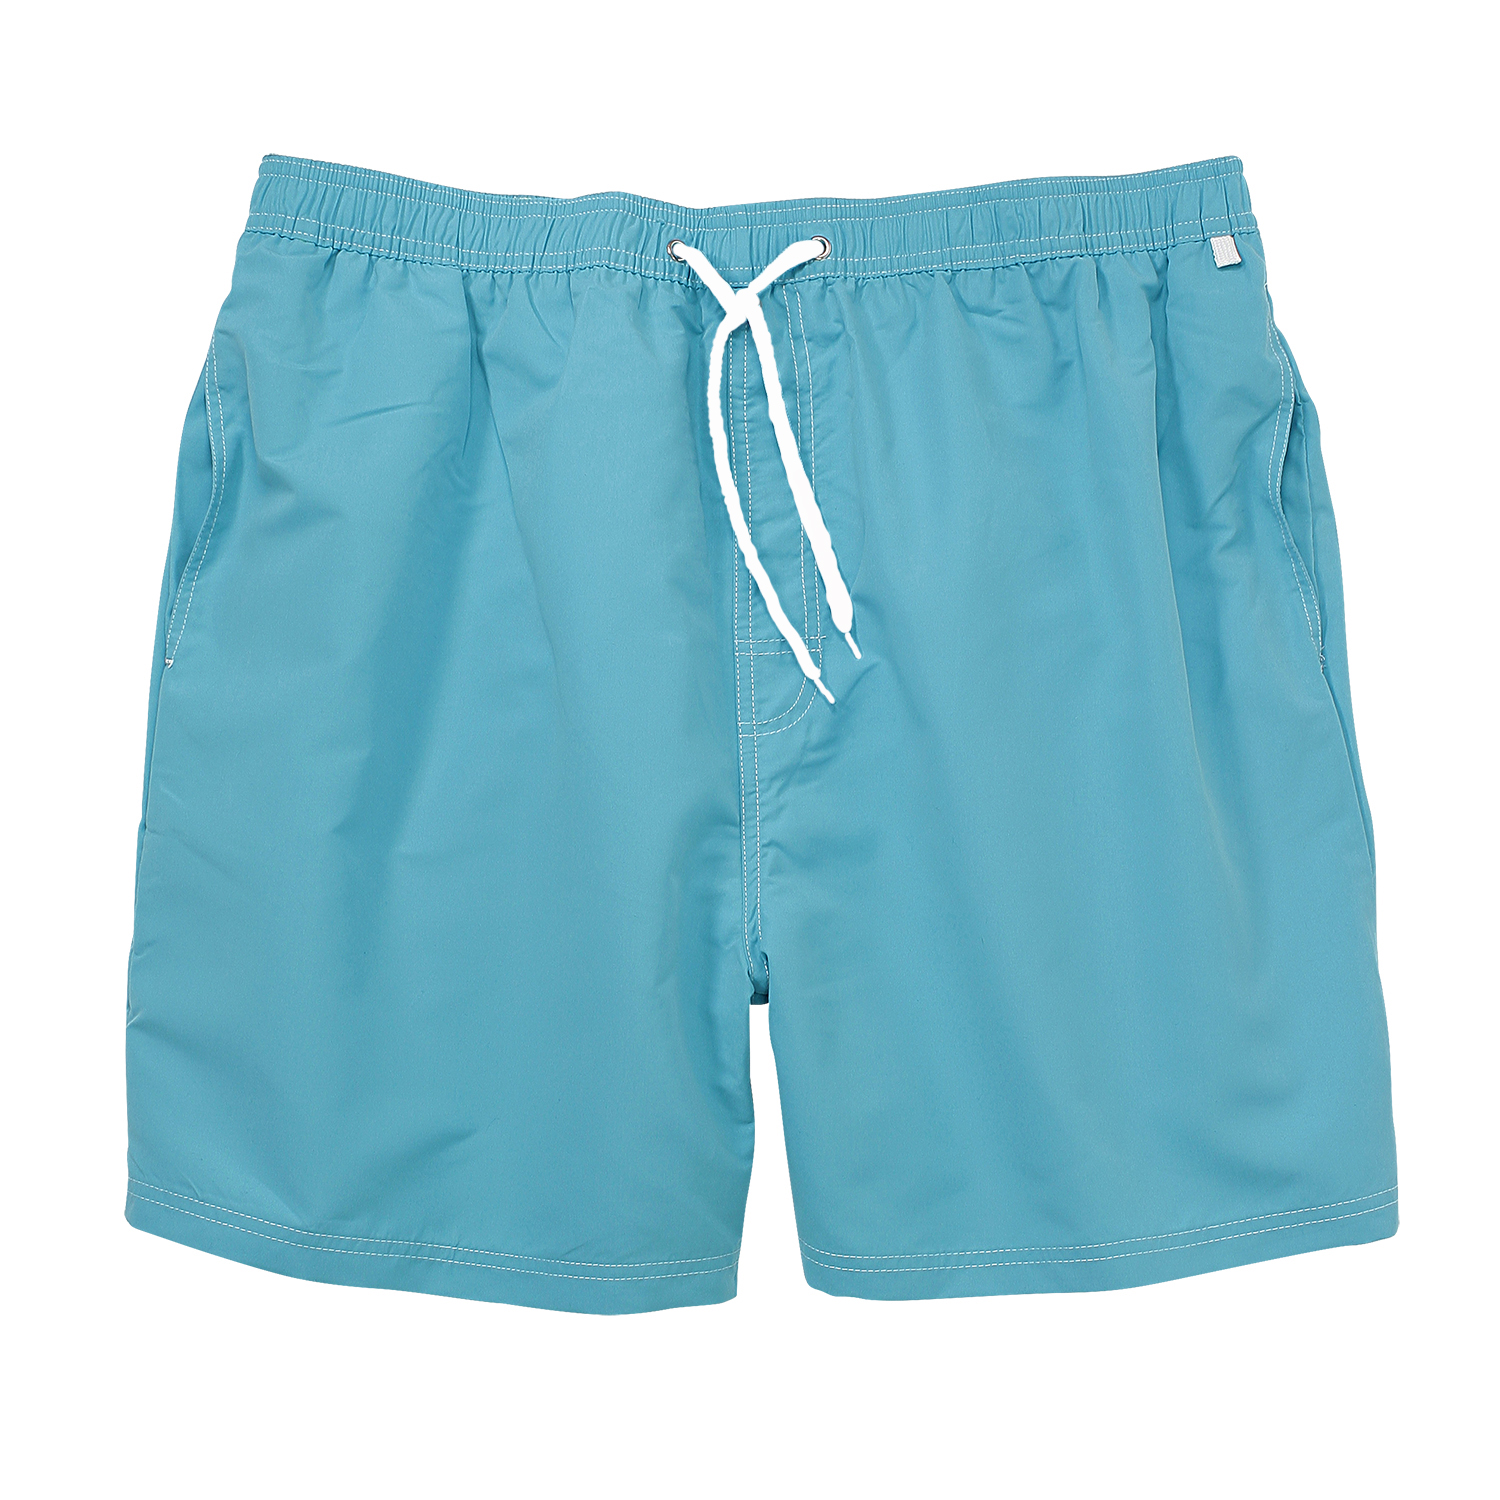 Swim bermudas by eleMar for men light blue in oversizes up to 10XL